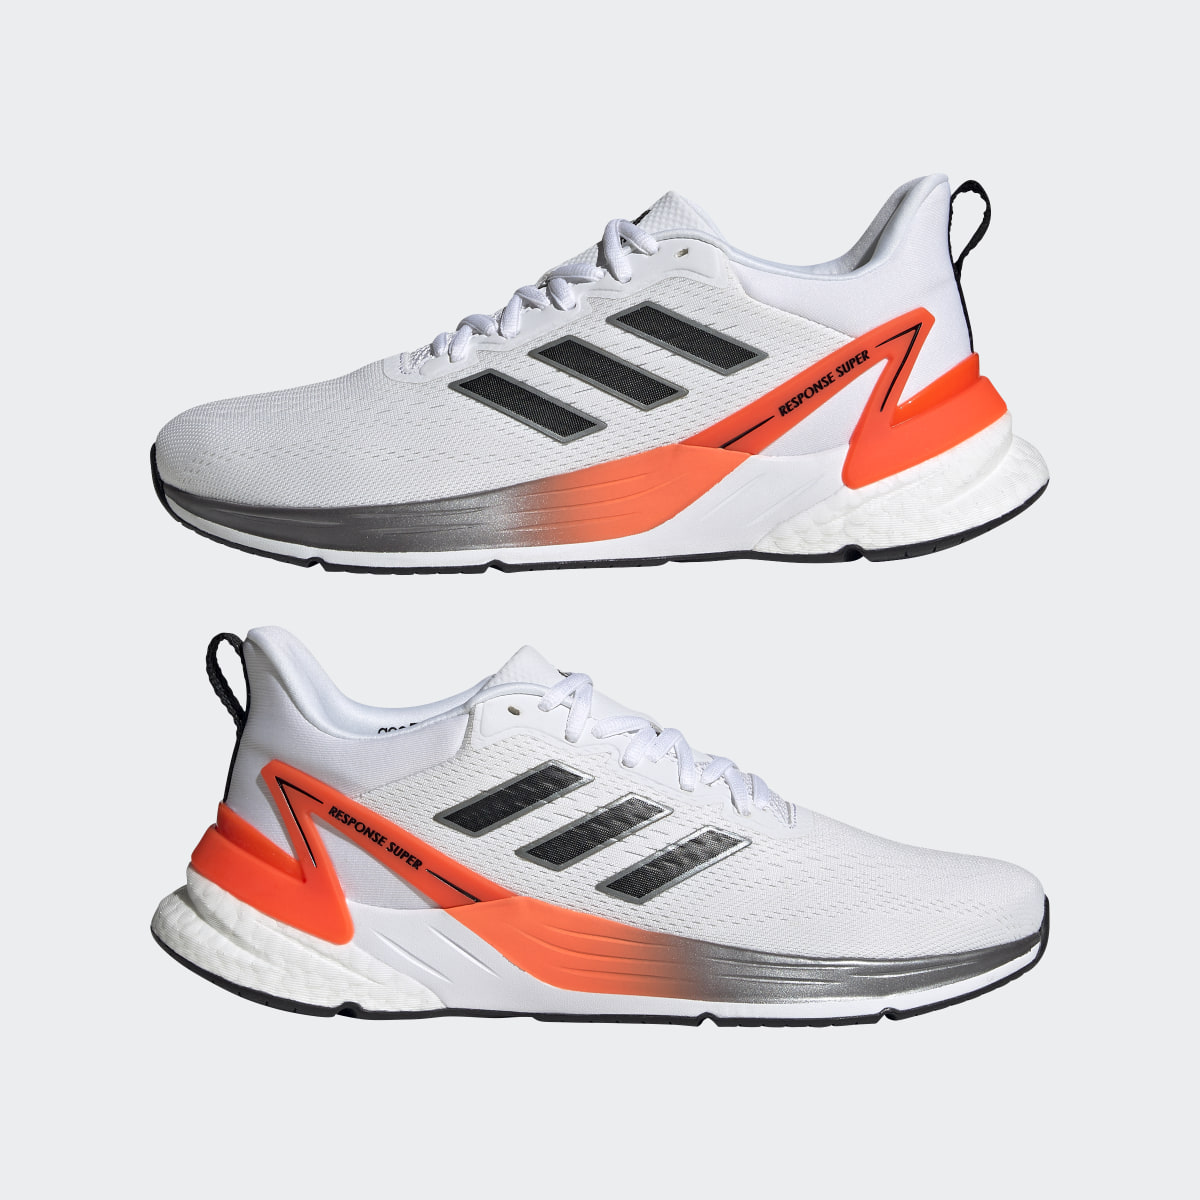 Adidas Response Super 2.0 Shoes. 8